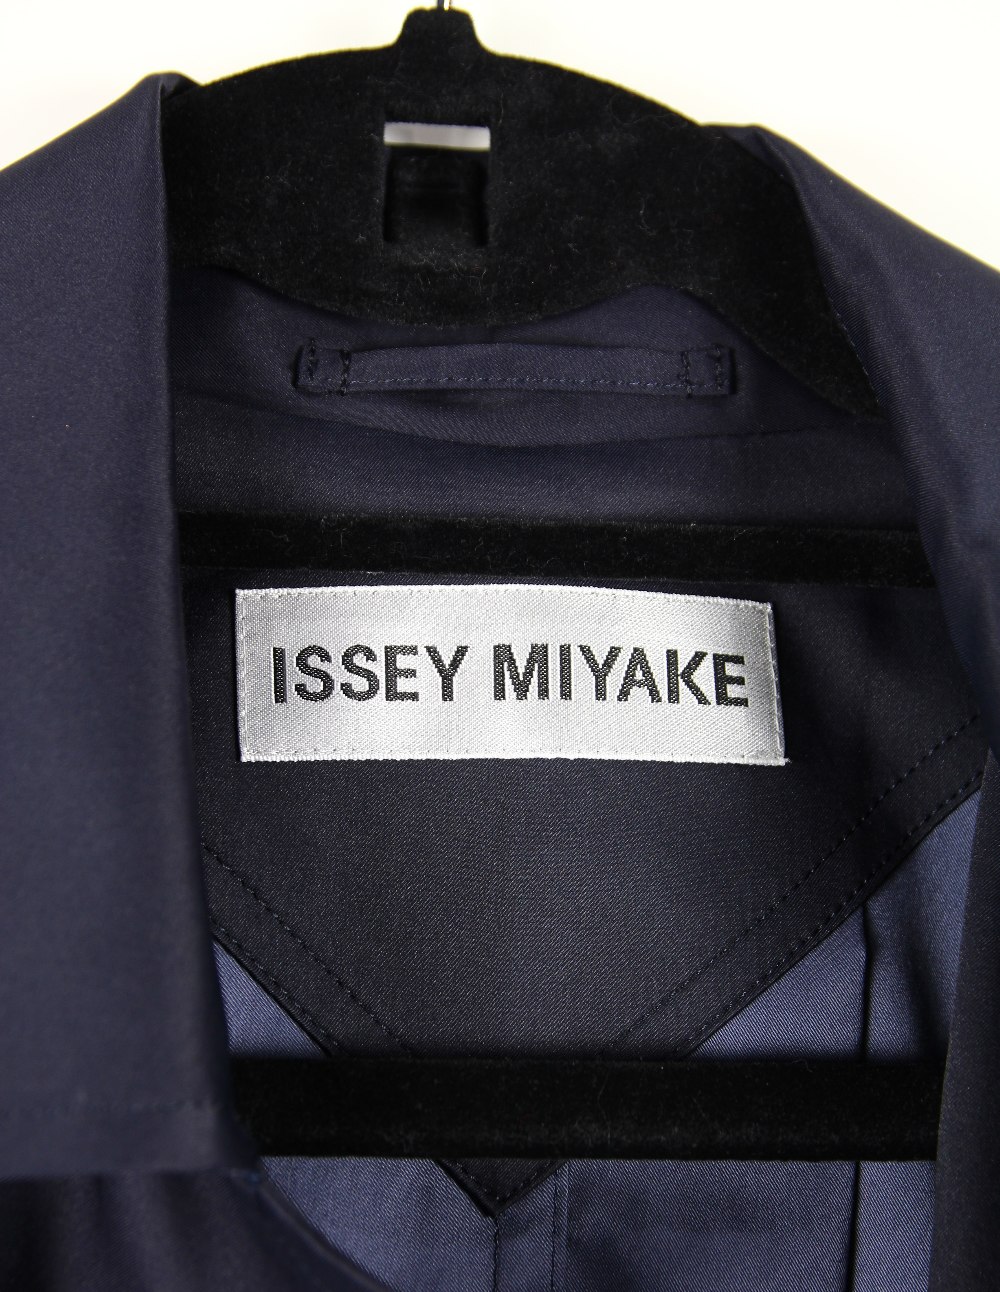 Issey Miyake navy blue trench coat - Image 4 of 4